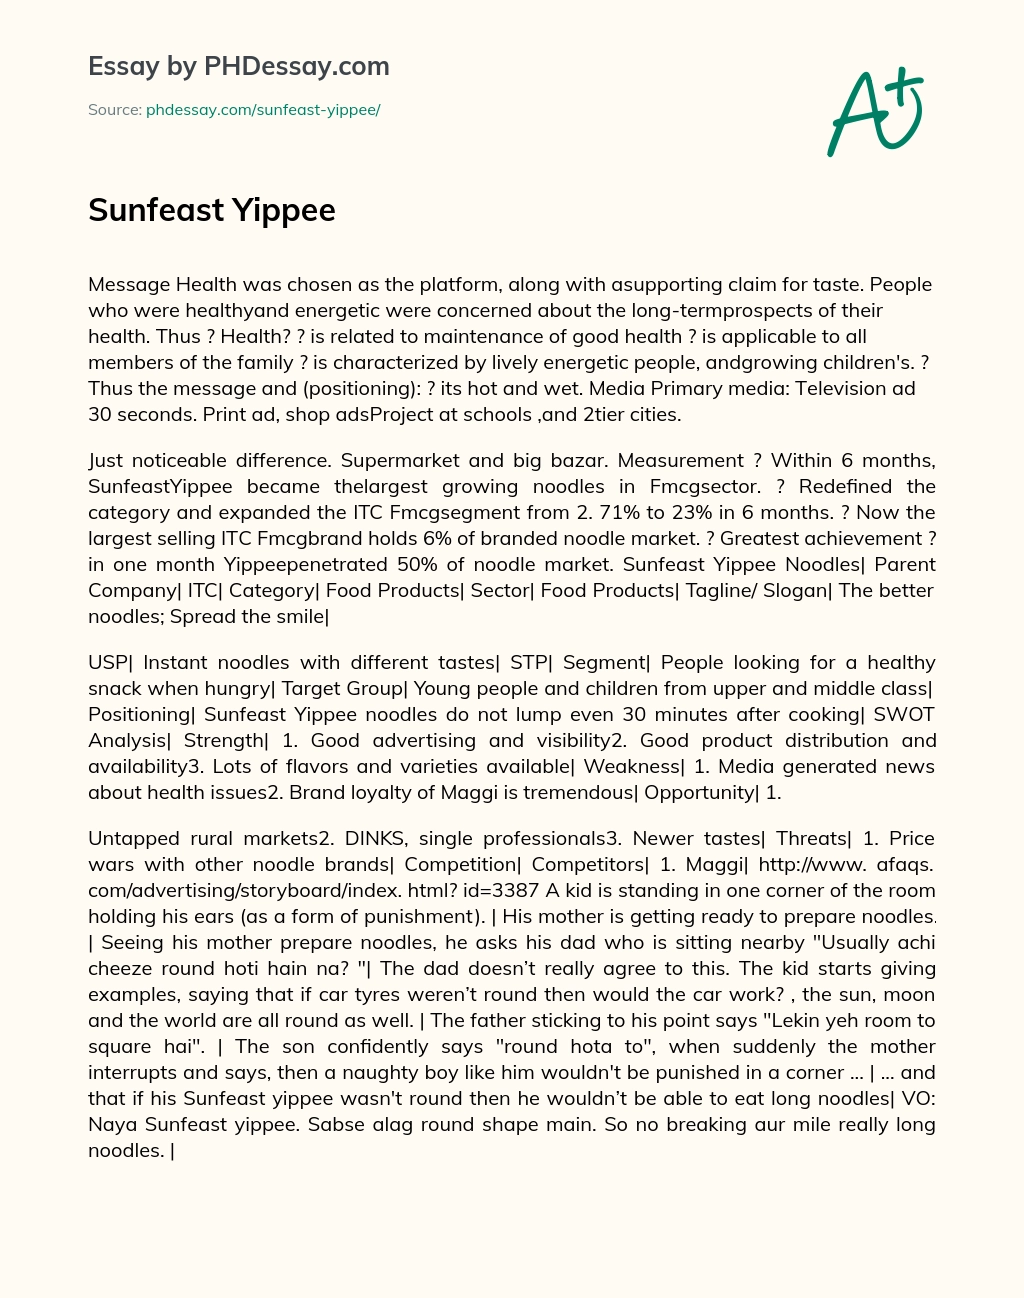 Sunfeast Yippee essay